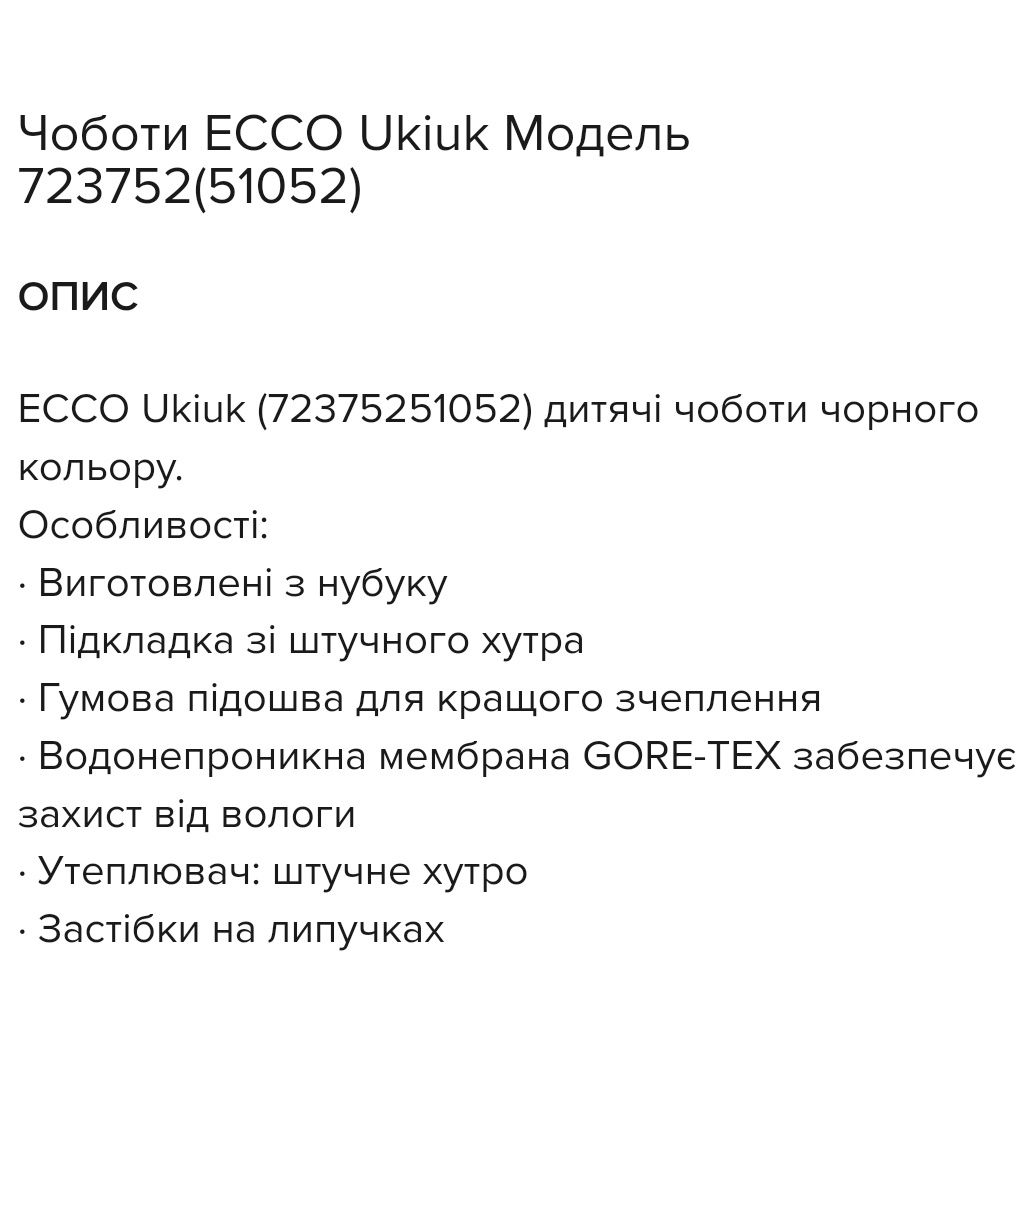 Чоботи Ecco Ukiuk , размер 27, мод. 723752 (51052),ботинки зимние Экко